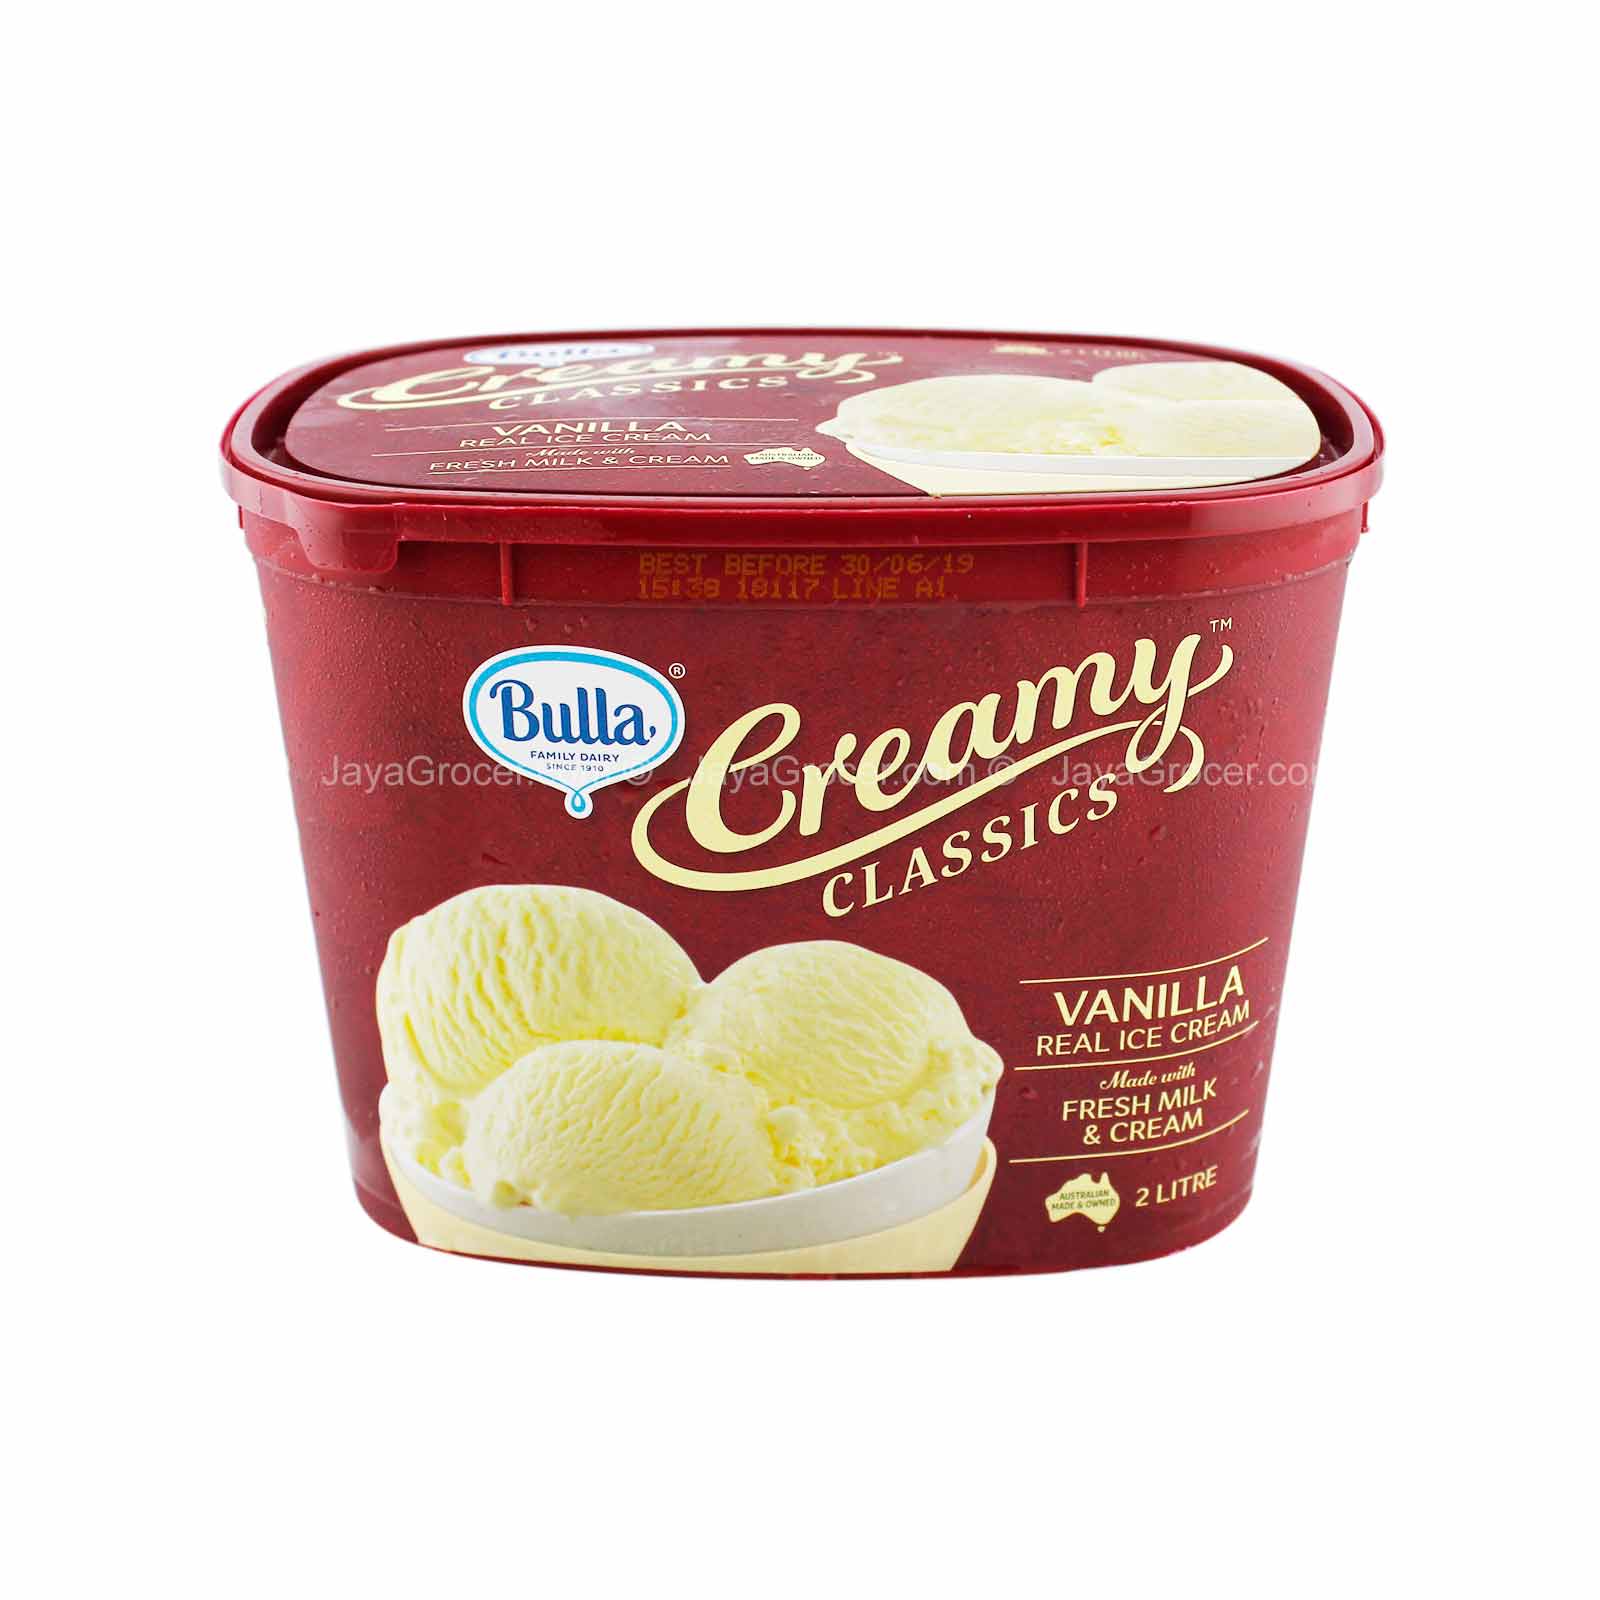 Great Value Vanilla Ice Cream, 1.5L